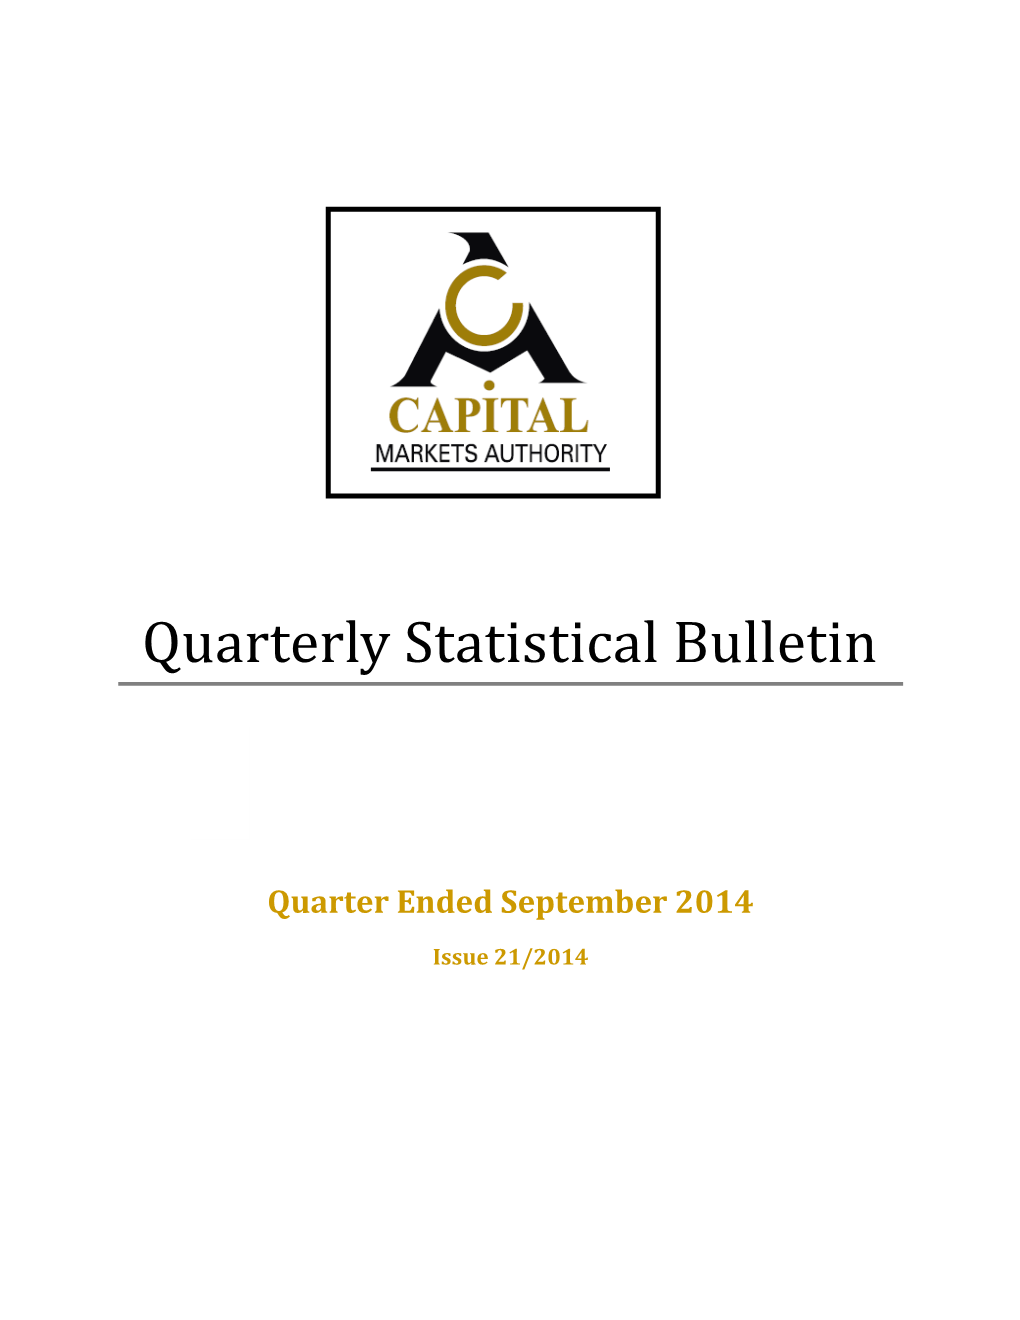 Capital Markets Authority Statistical Bulletin Q3/2010